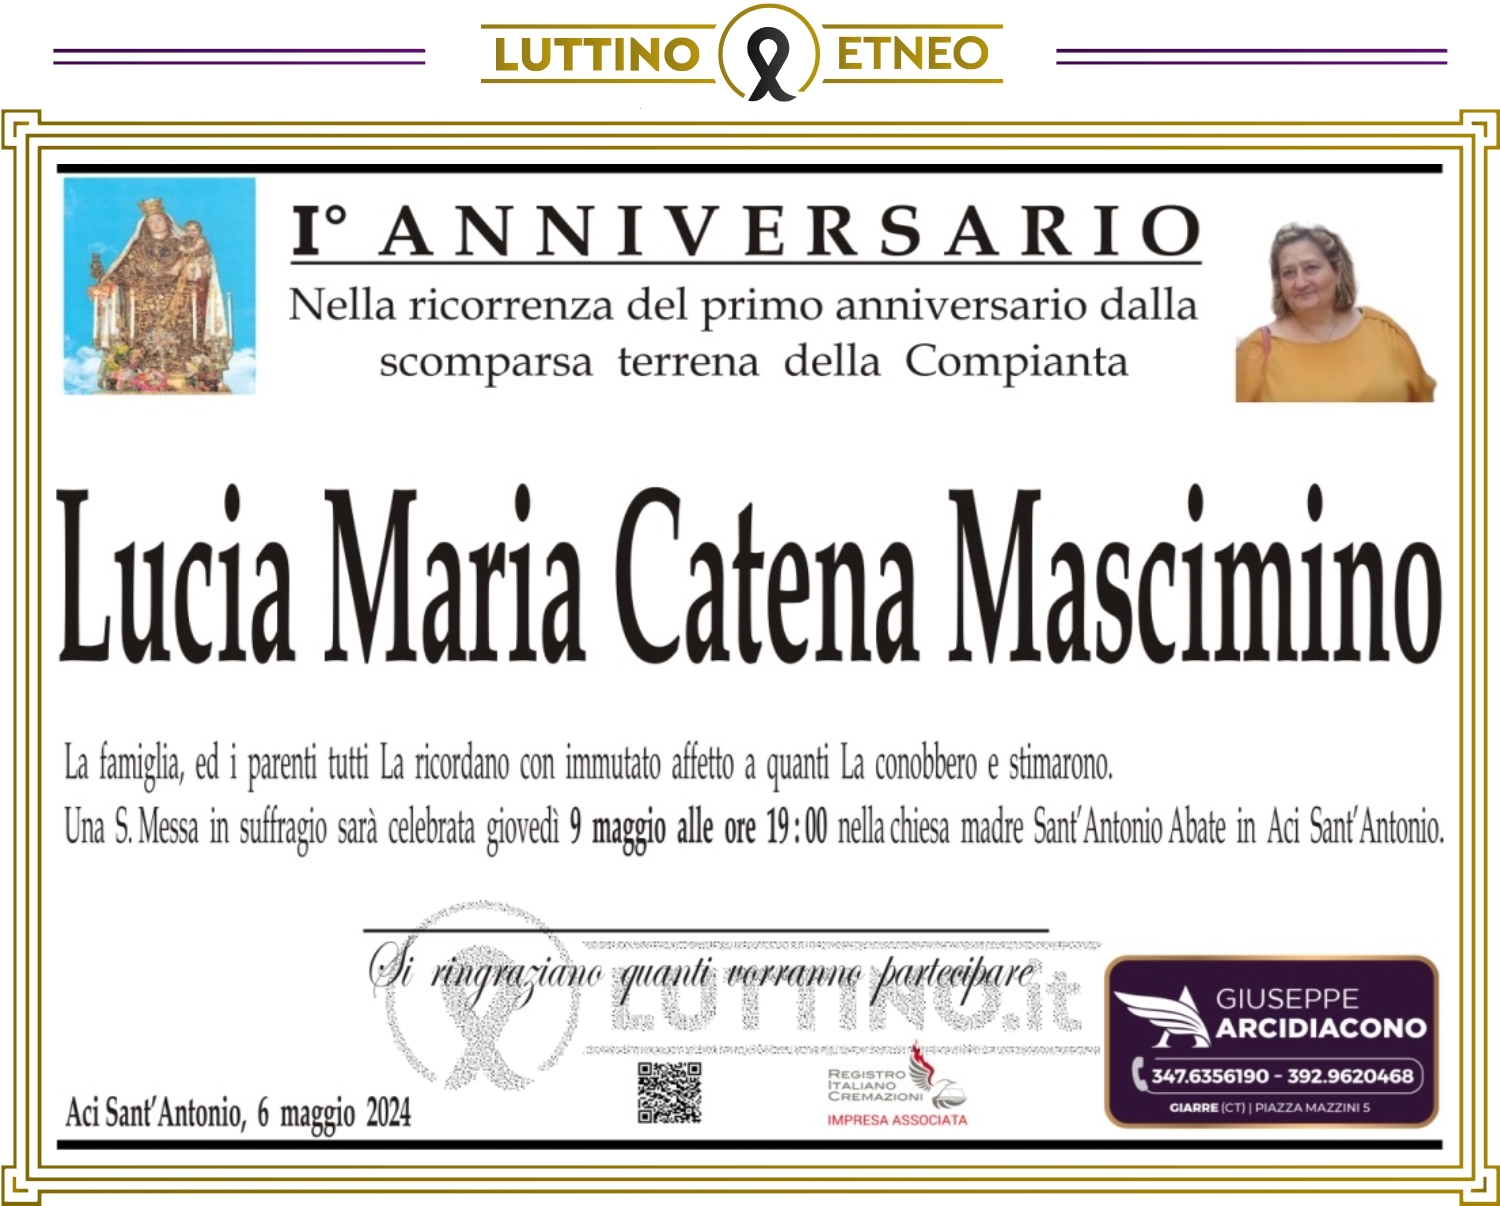 Lucia Maria Catena Mascimino